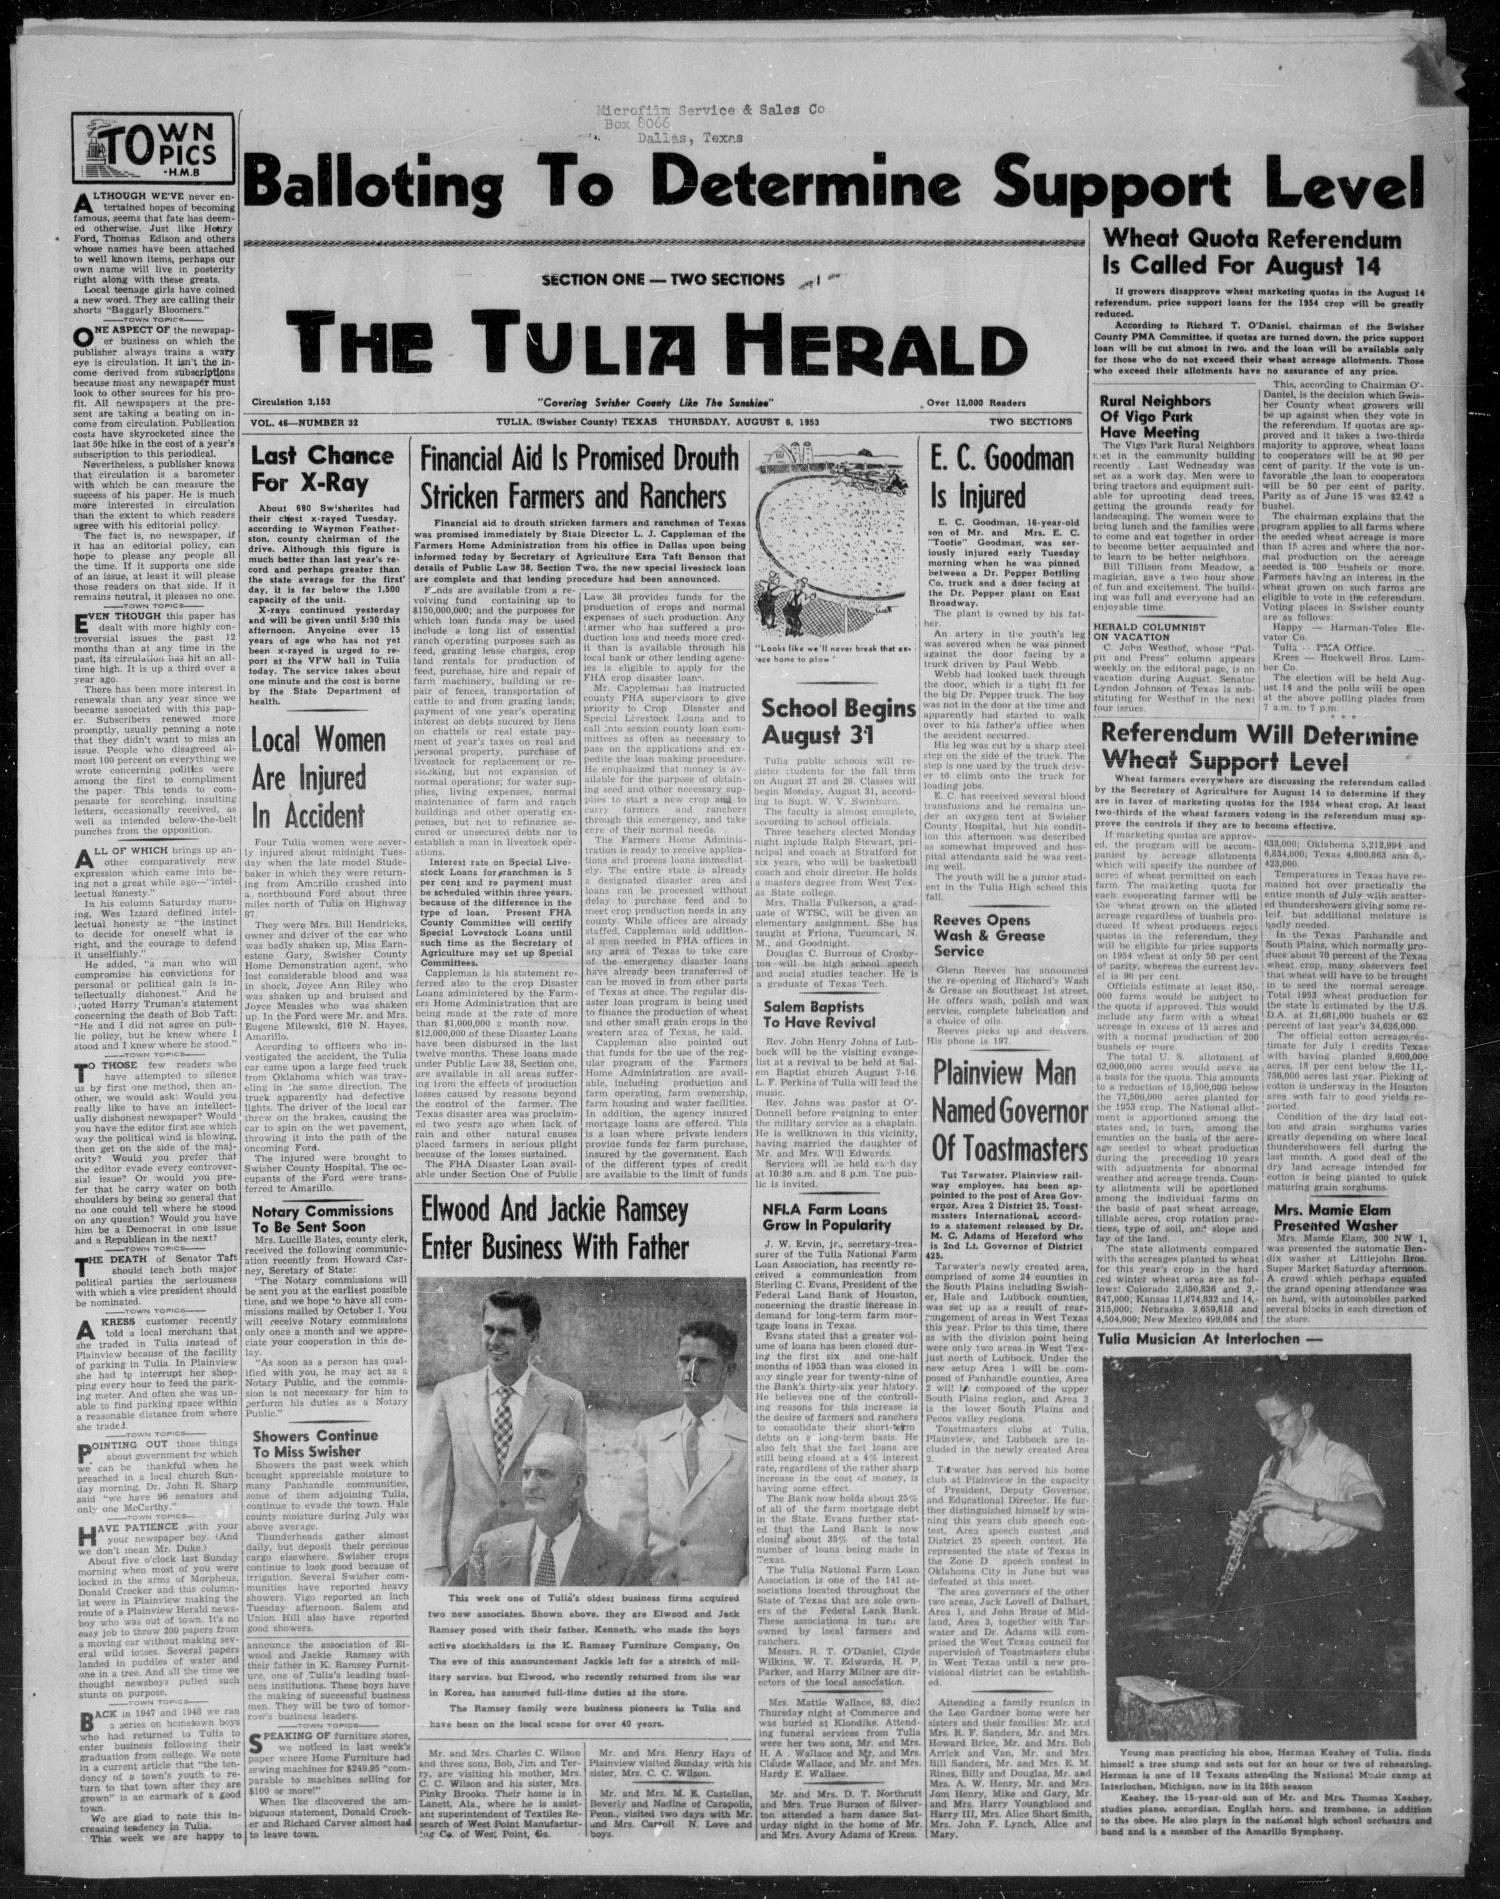 The Tulia Herald (Tulia, Tex), Vol. 46, No. 32, Ed. 1, Thursday, August 6, 1953
                                                
                                                    1
                                                